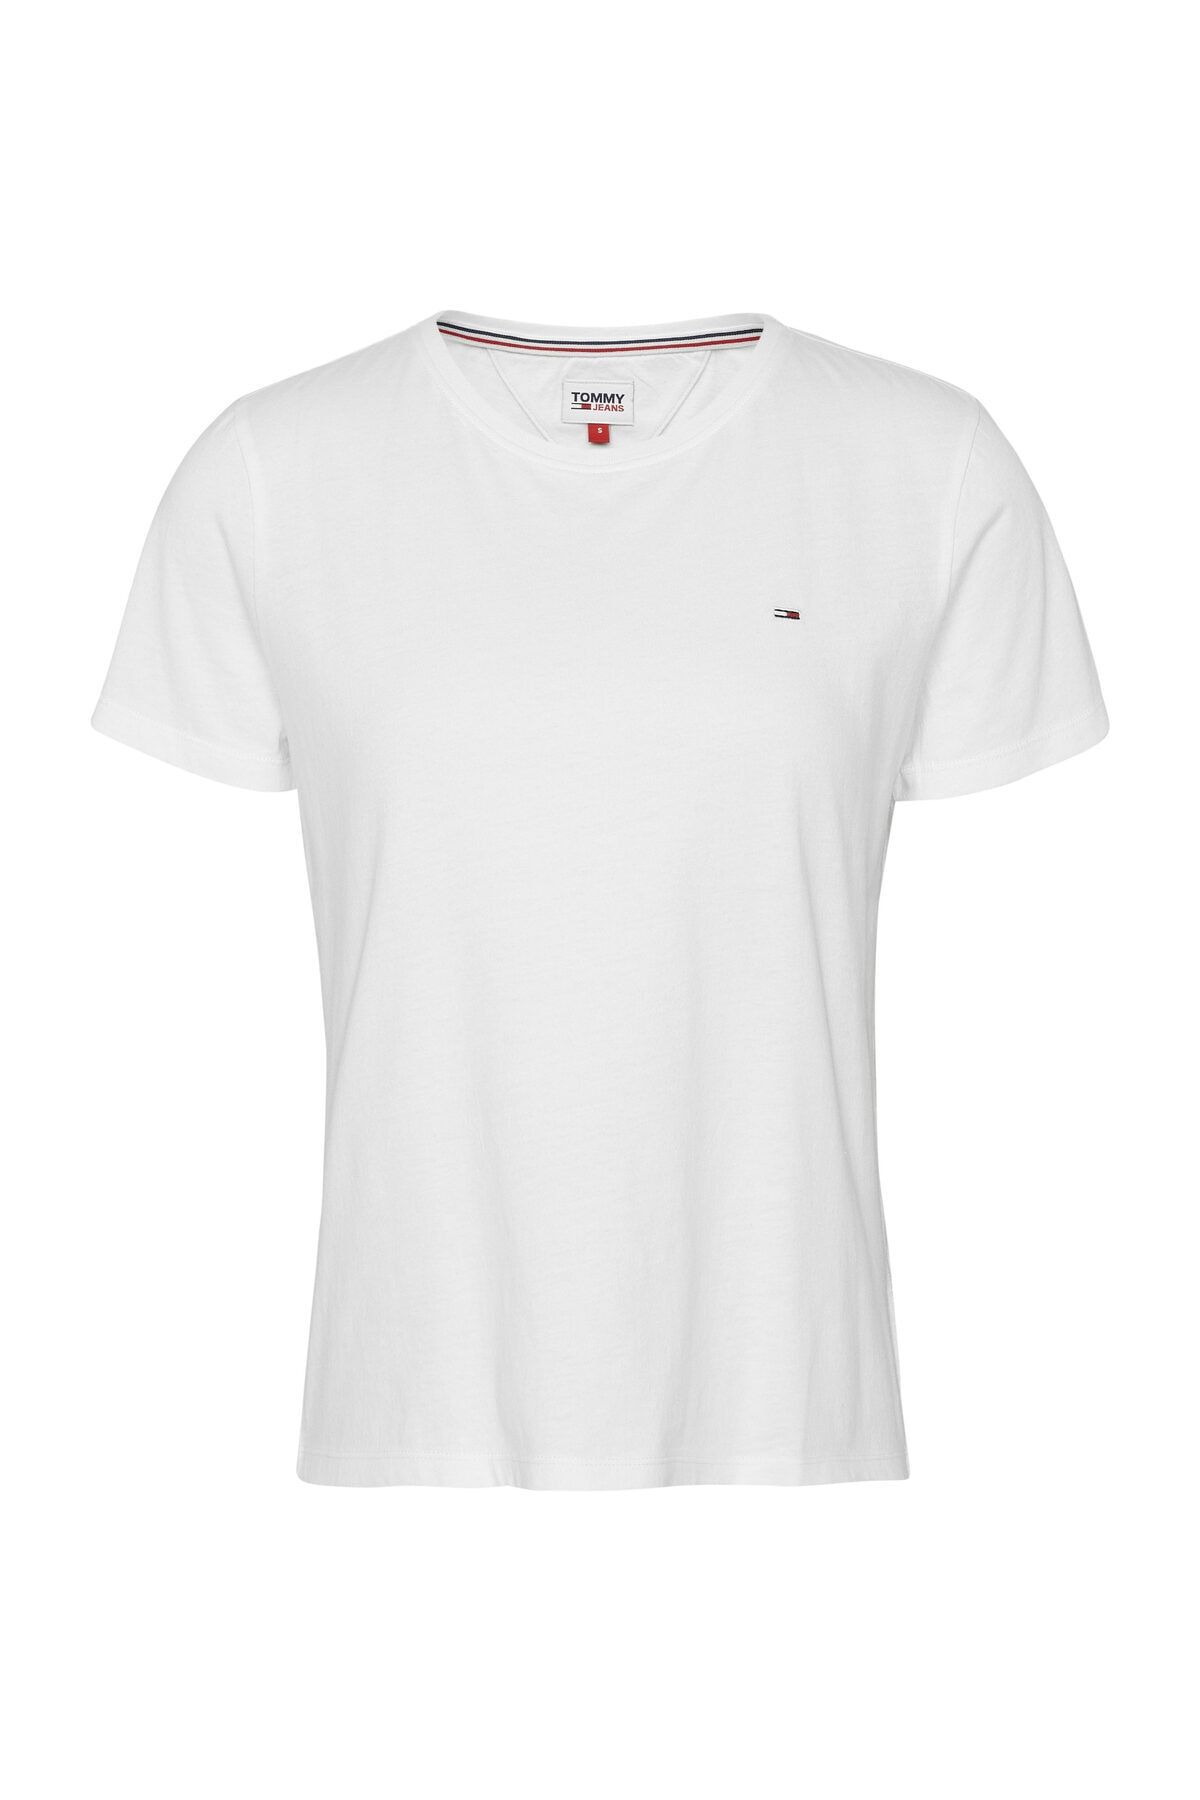 Tommy Hilfiger Kadın Beyaz T-Shirt Tjw Soft Jersey Tee DW0DW06901